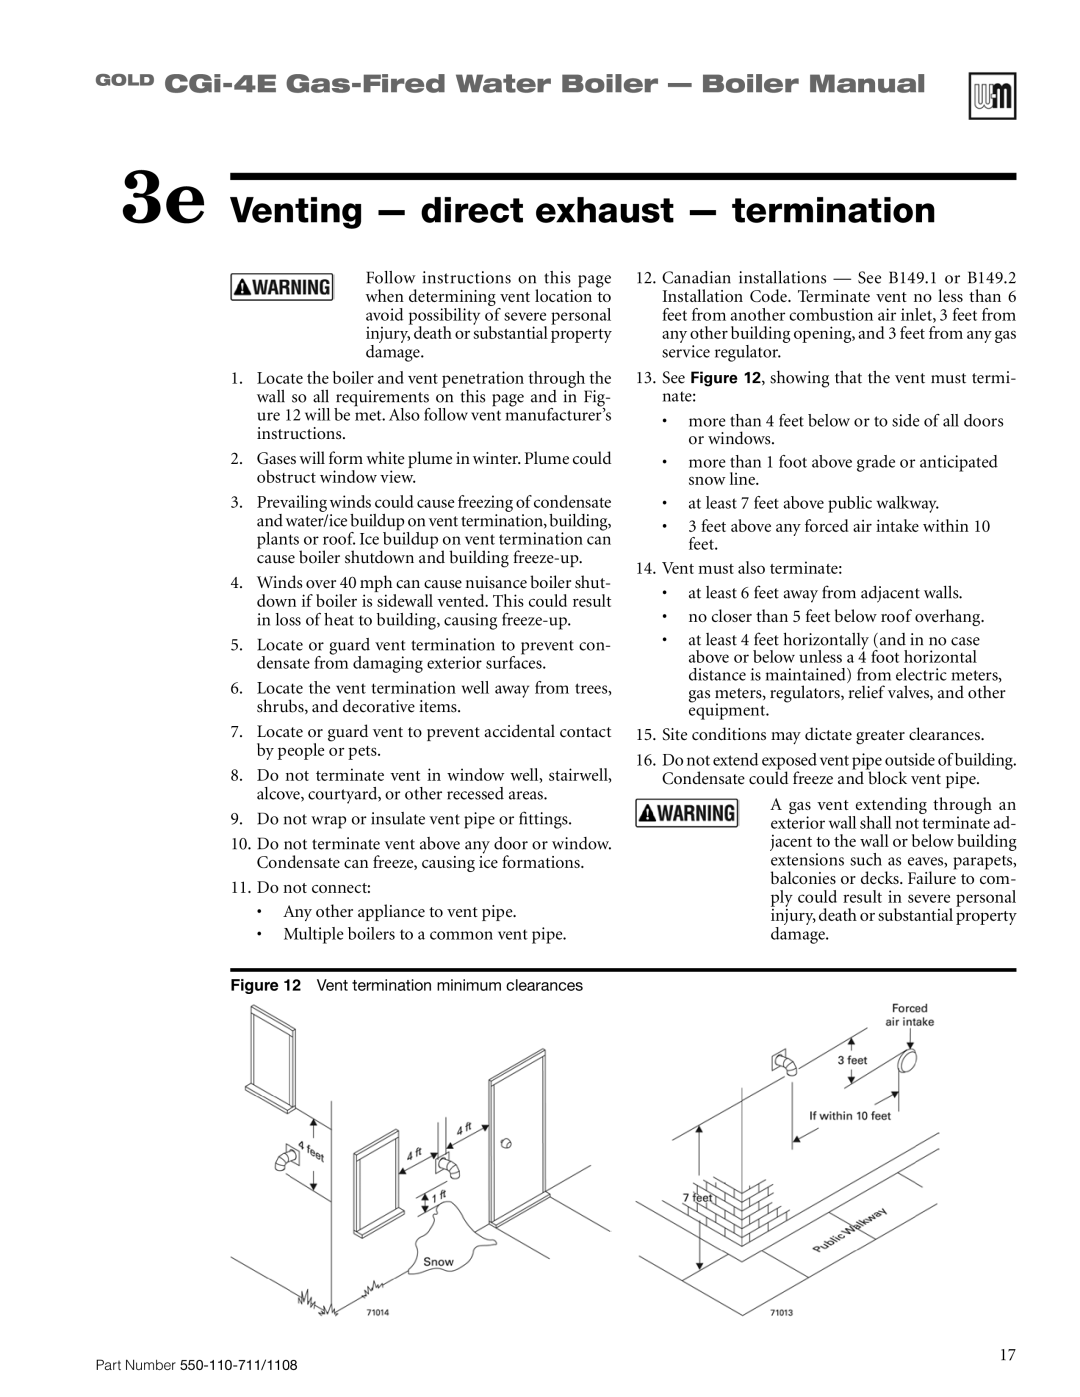 Weil-McLain CGI-4E manual 3e Venting - direct exhaust - termination, GOLD CGi-4E Gas-FiredWater Boiler - Boiler Manual 